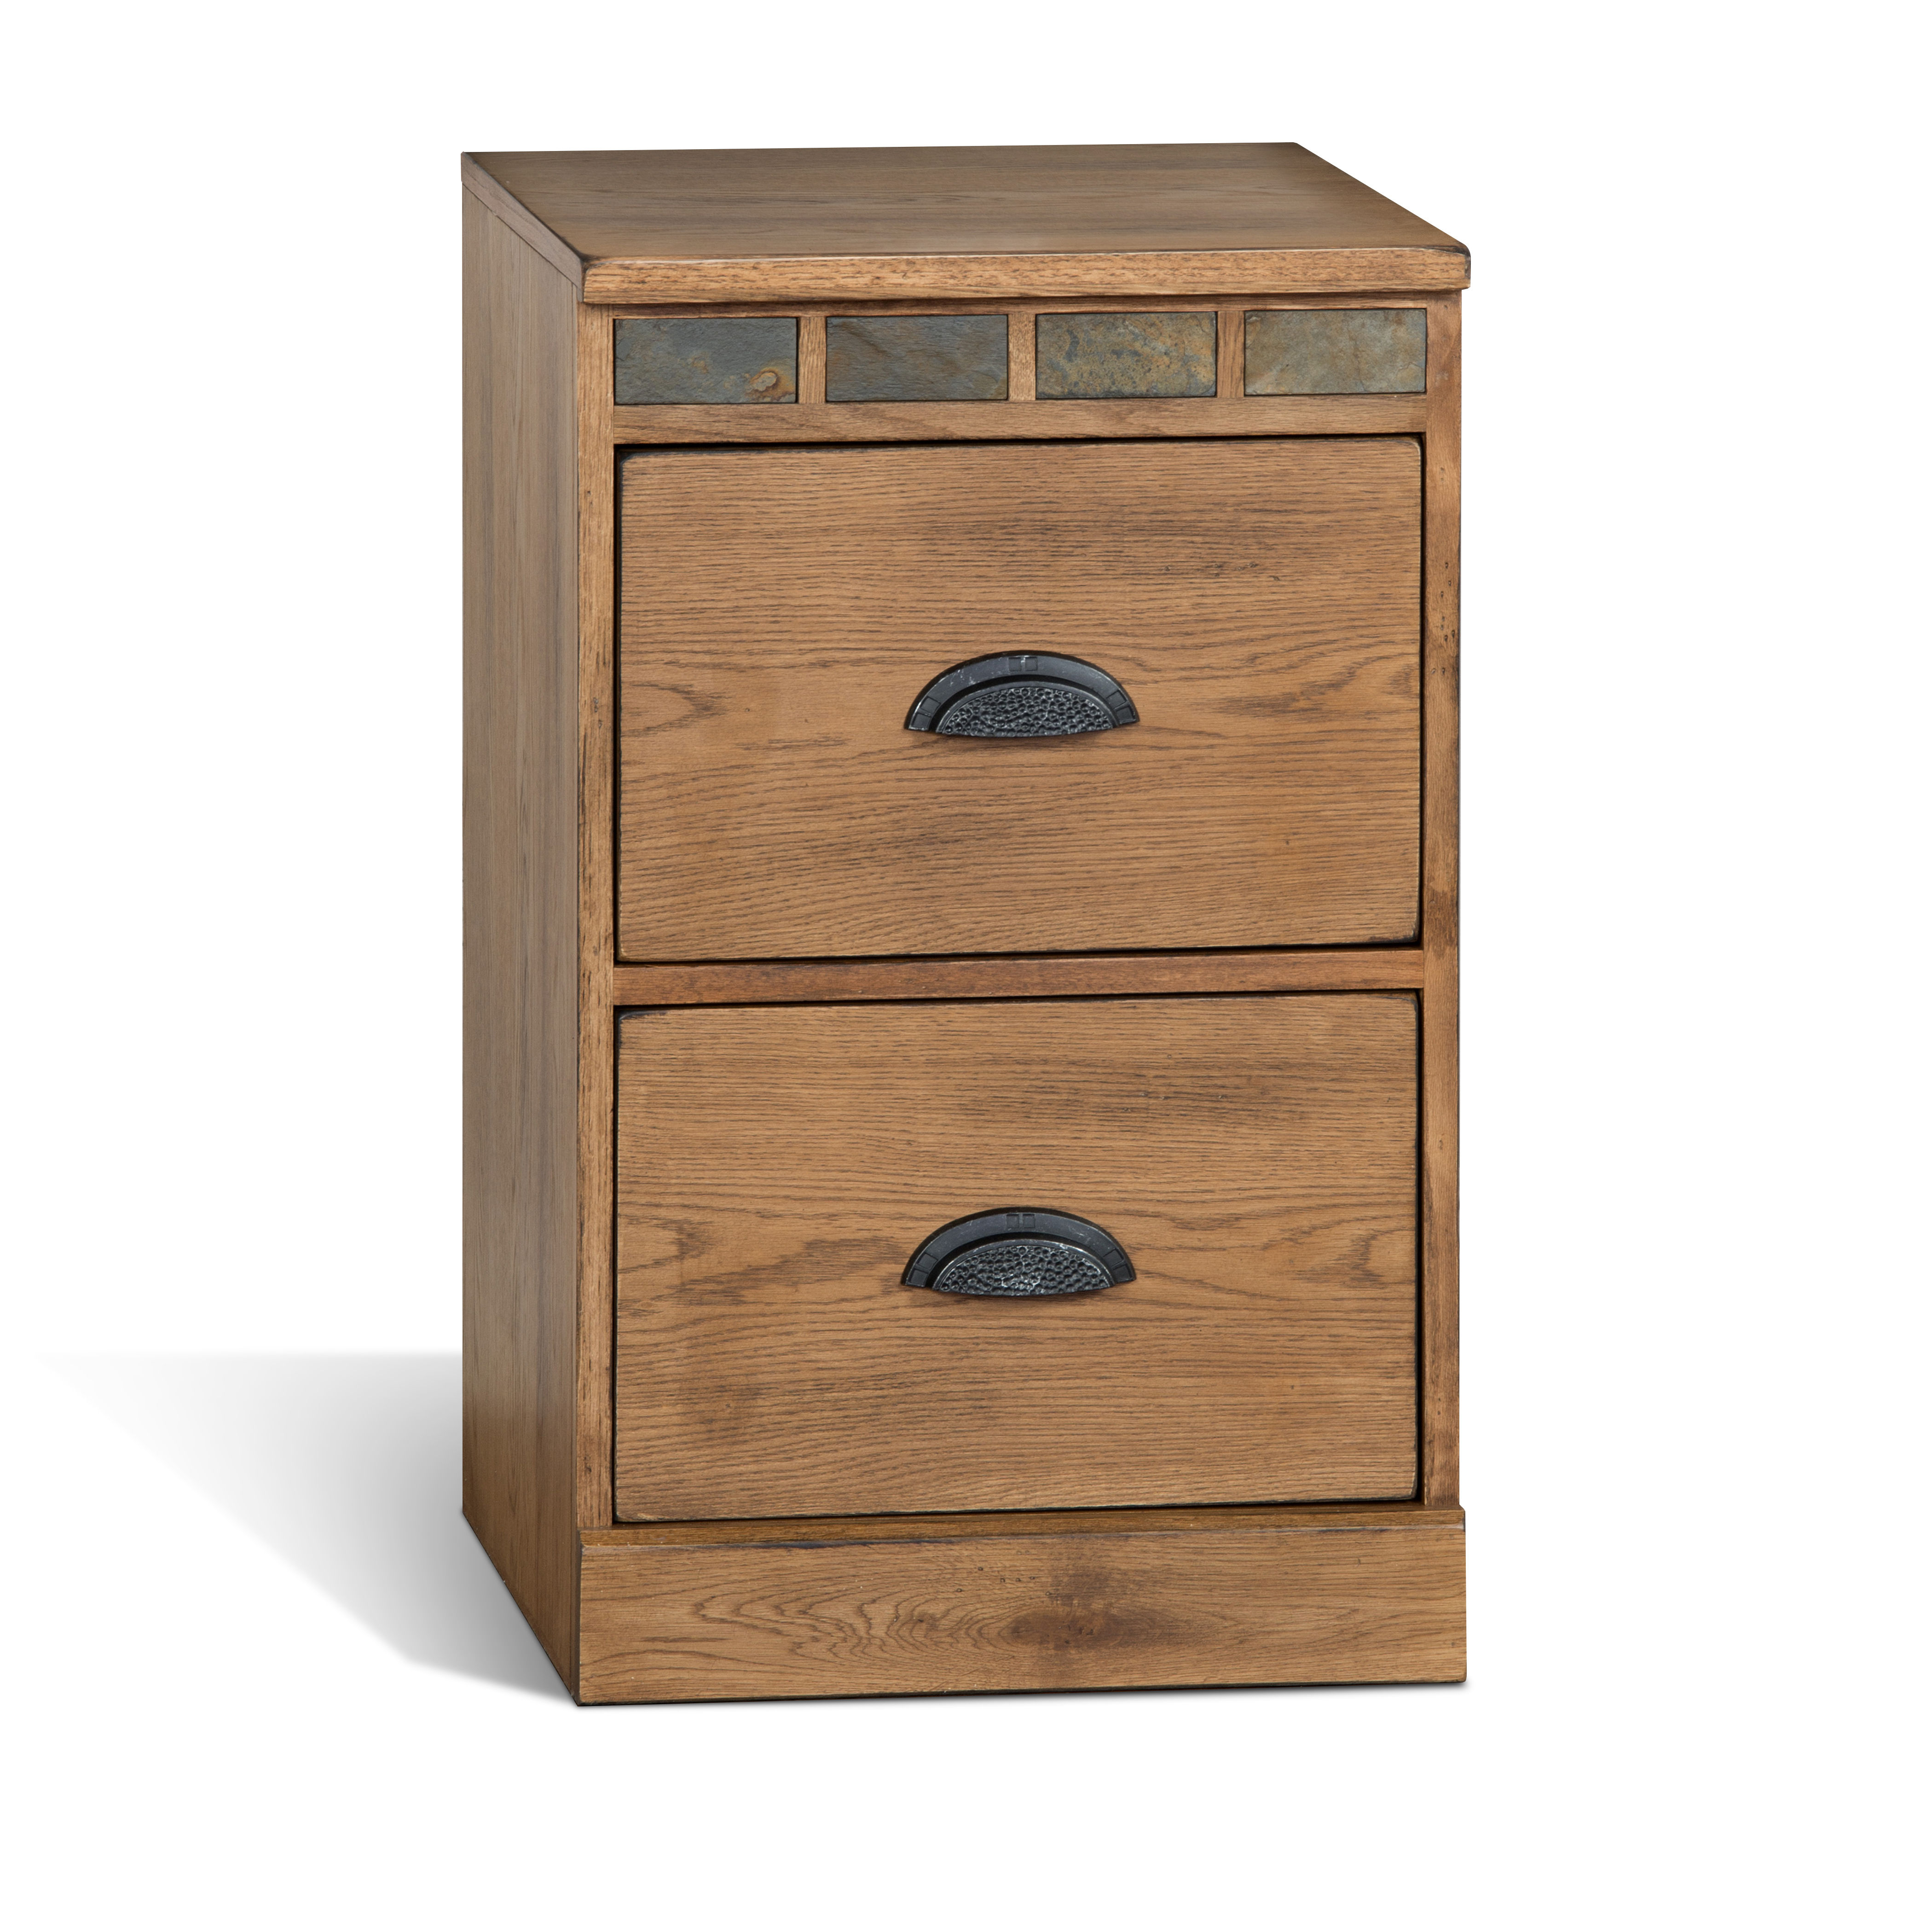 Sunny Designs Sedona Rustic Oak File Cabinet The Classy Home for measurements 4198 X 4197